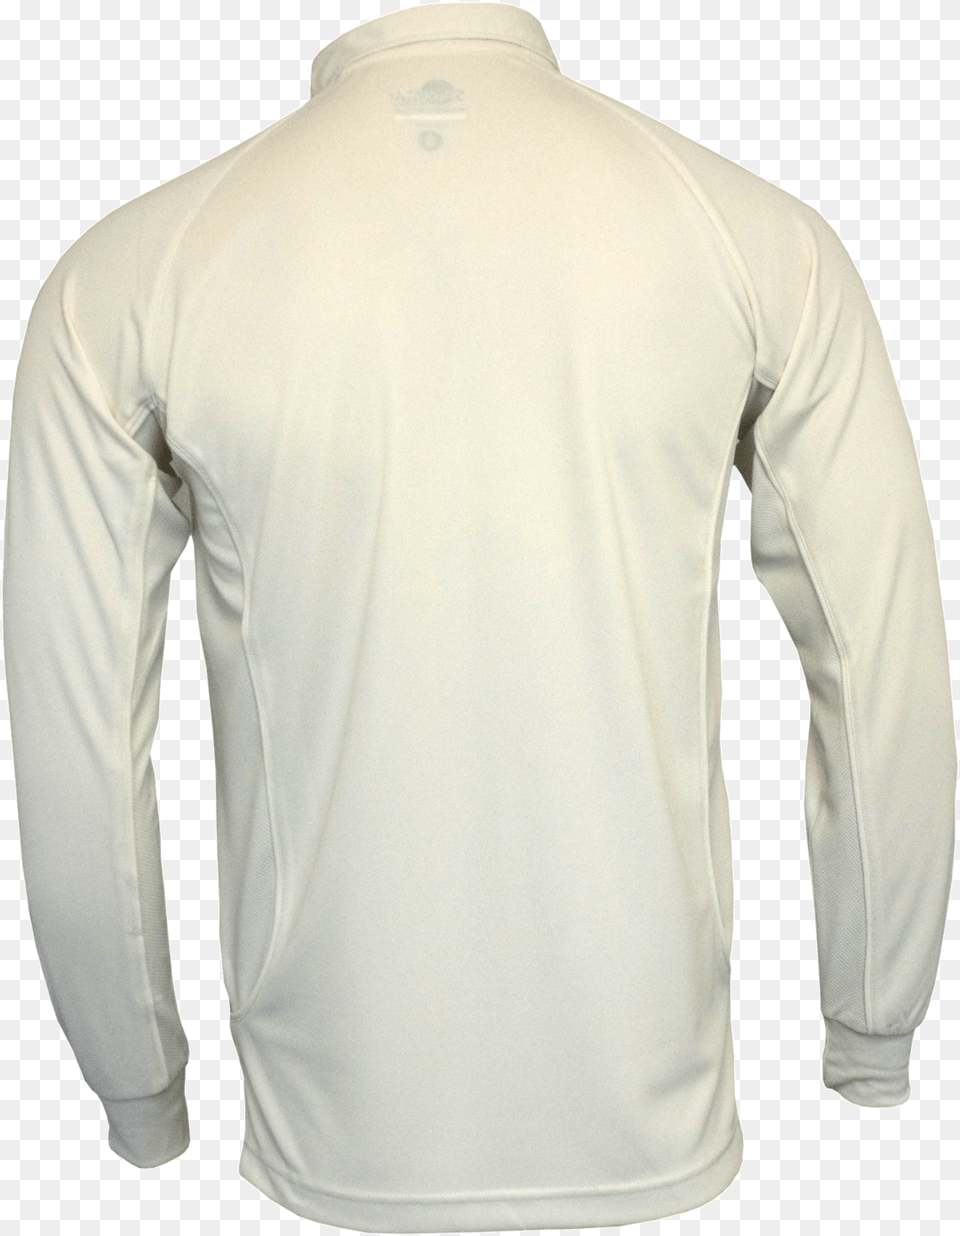 Long Sleeve Stock Cricket Shirt Back, Clothing, Long Sleeve Free Transparent Png